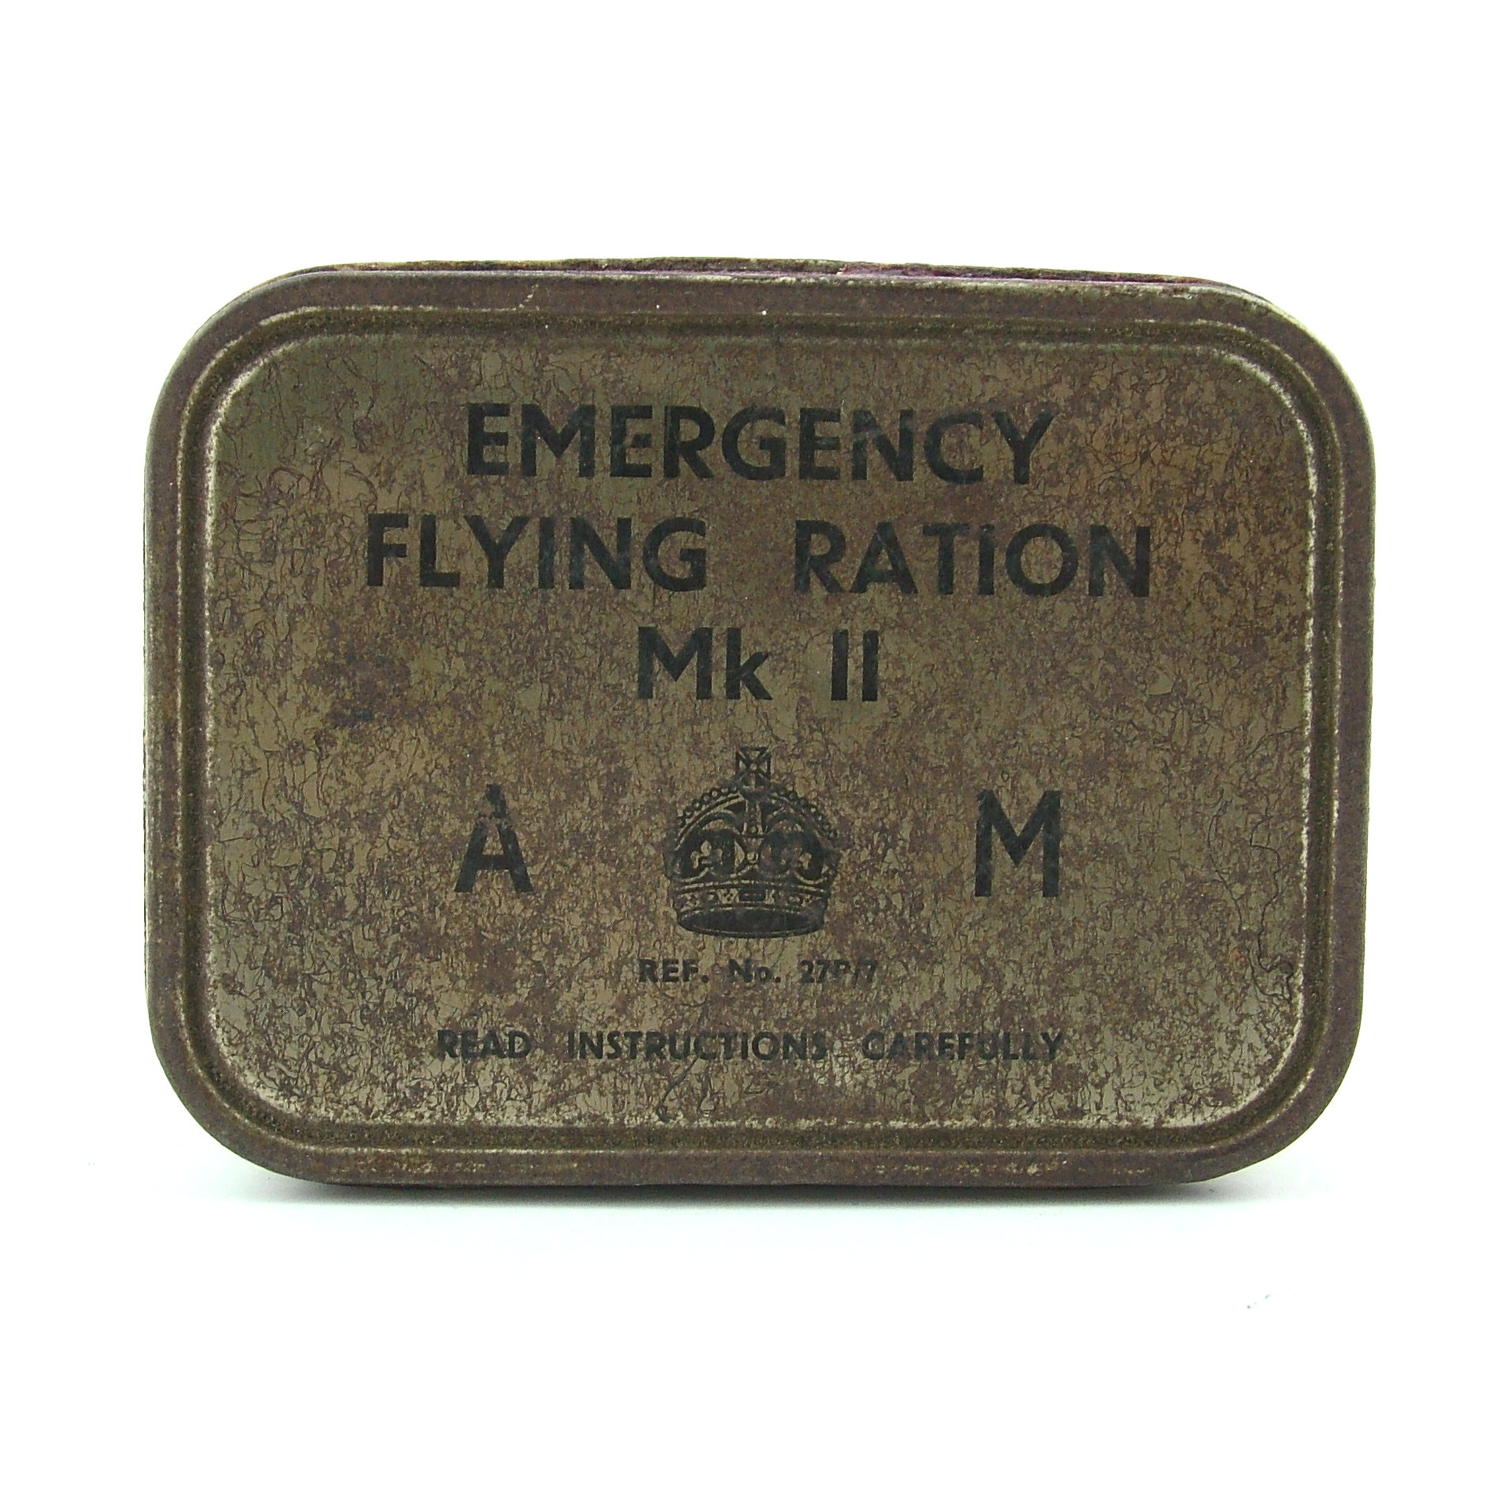 Air Ministry emergency flying ration, Mk.II